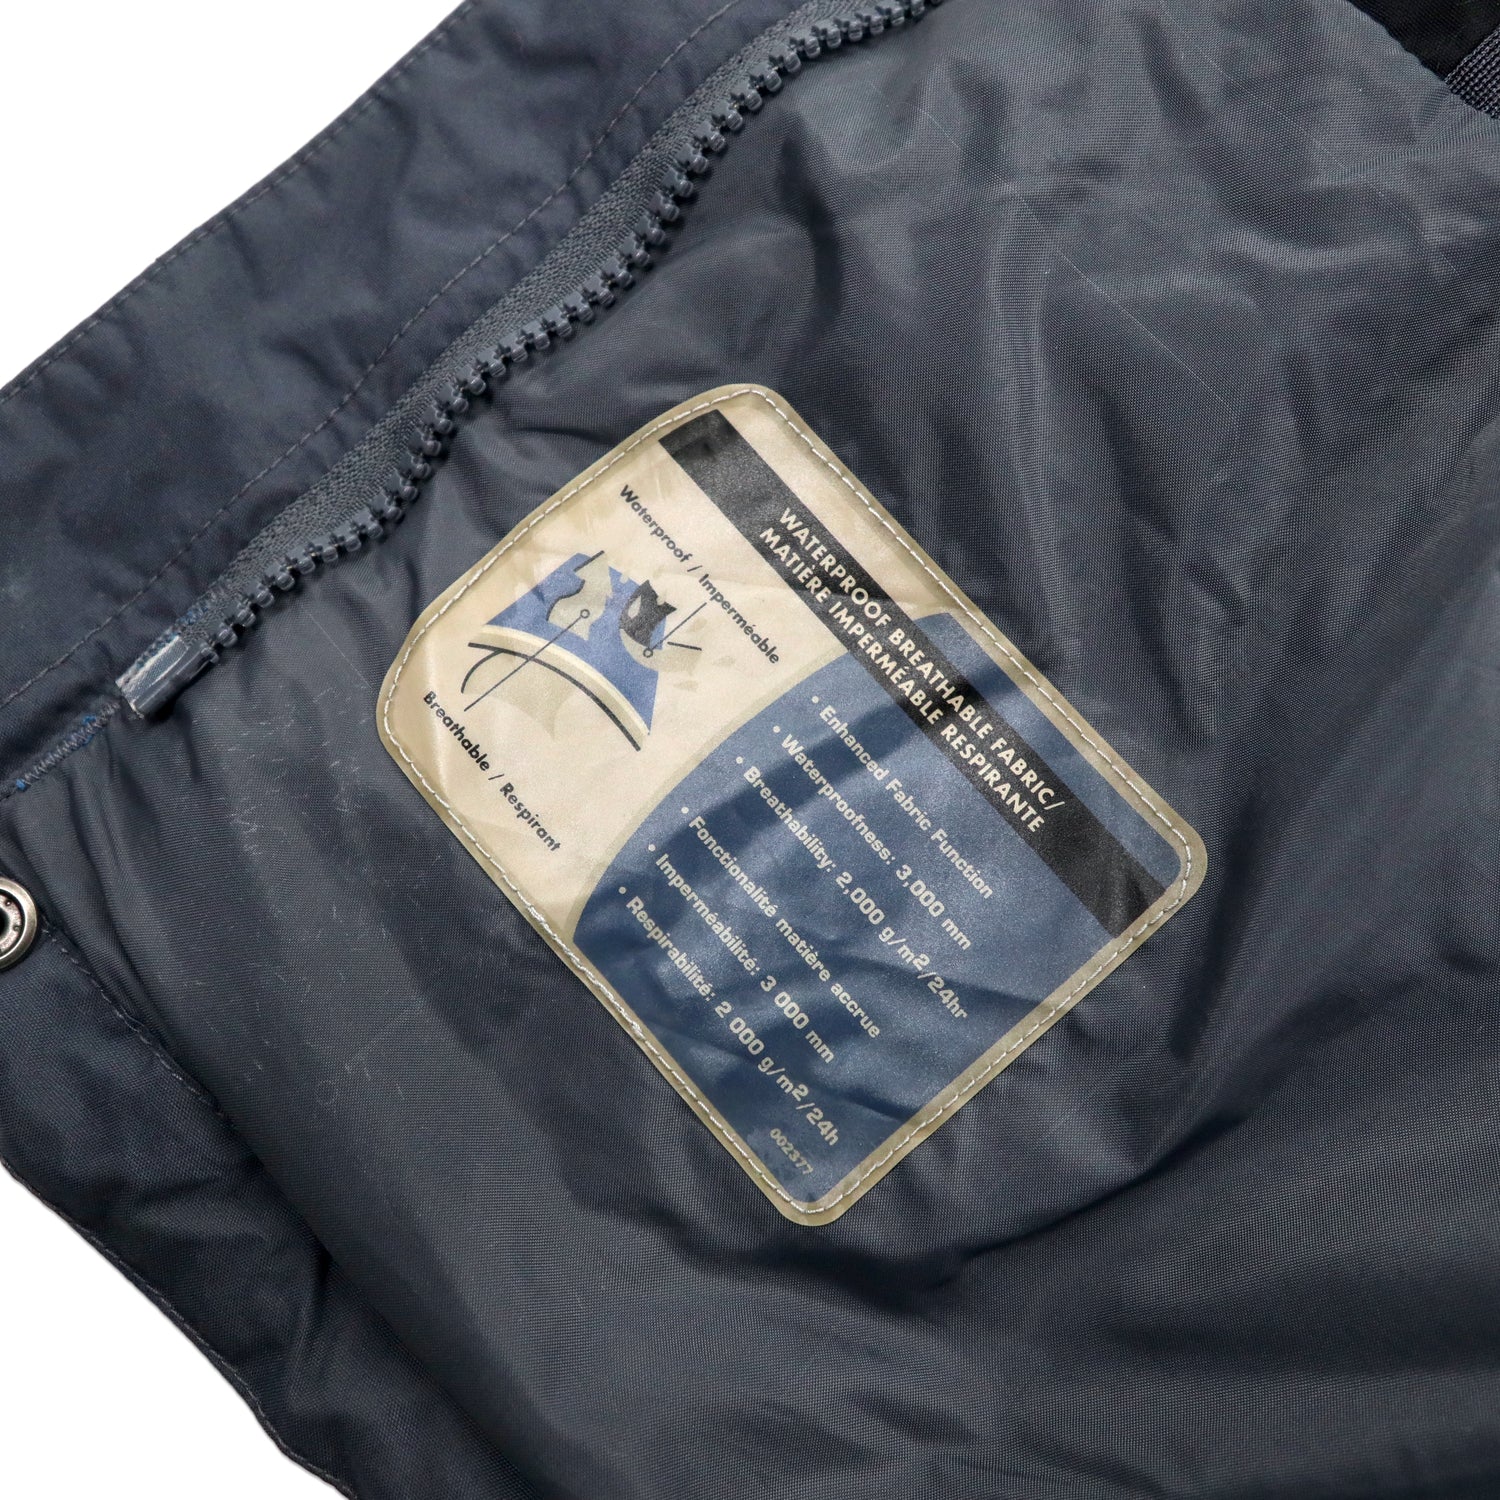 COLUMBIA VERTEX Mountain Jacket L Blue Nylon Waterproof Zip Insip 